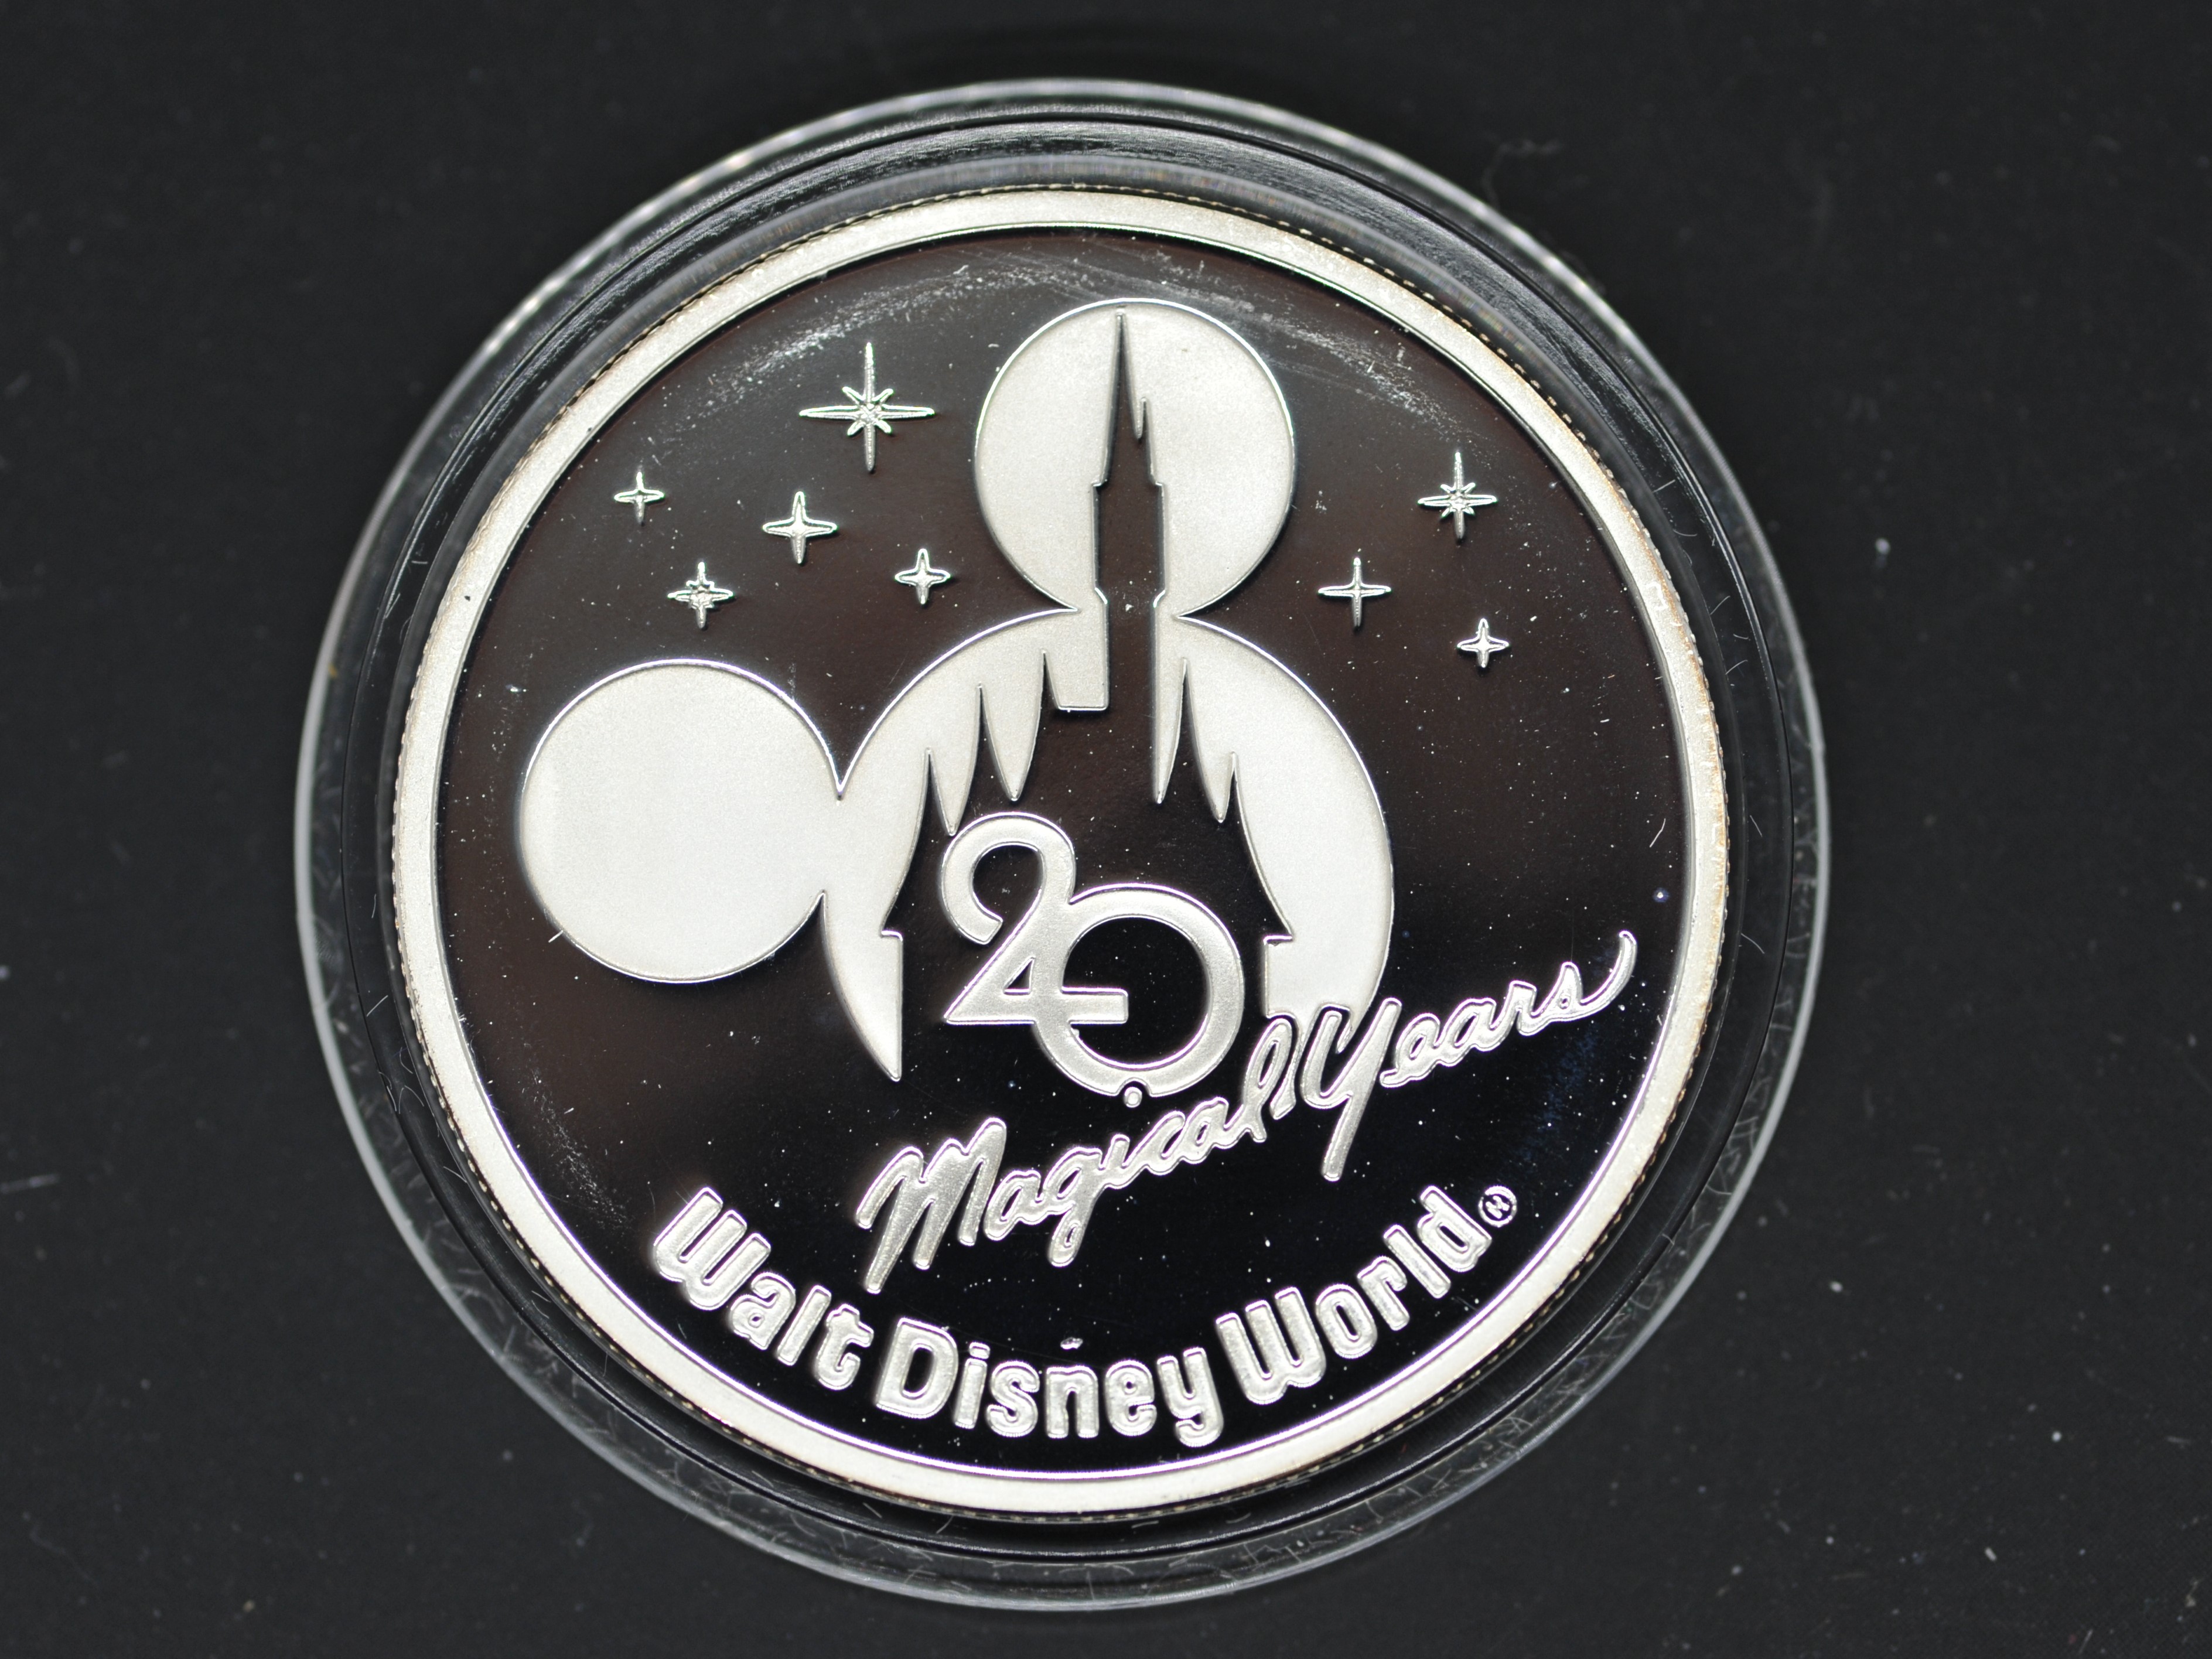 Silver - 20 years of Walt Disney World- A 1 troy oz (31.1 grams) fine grade .